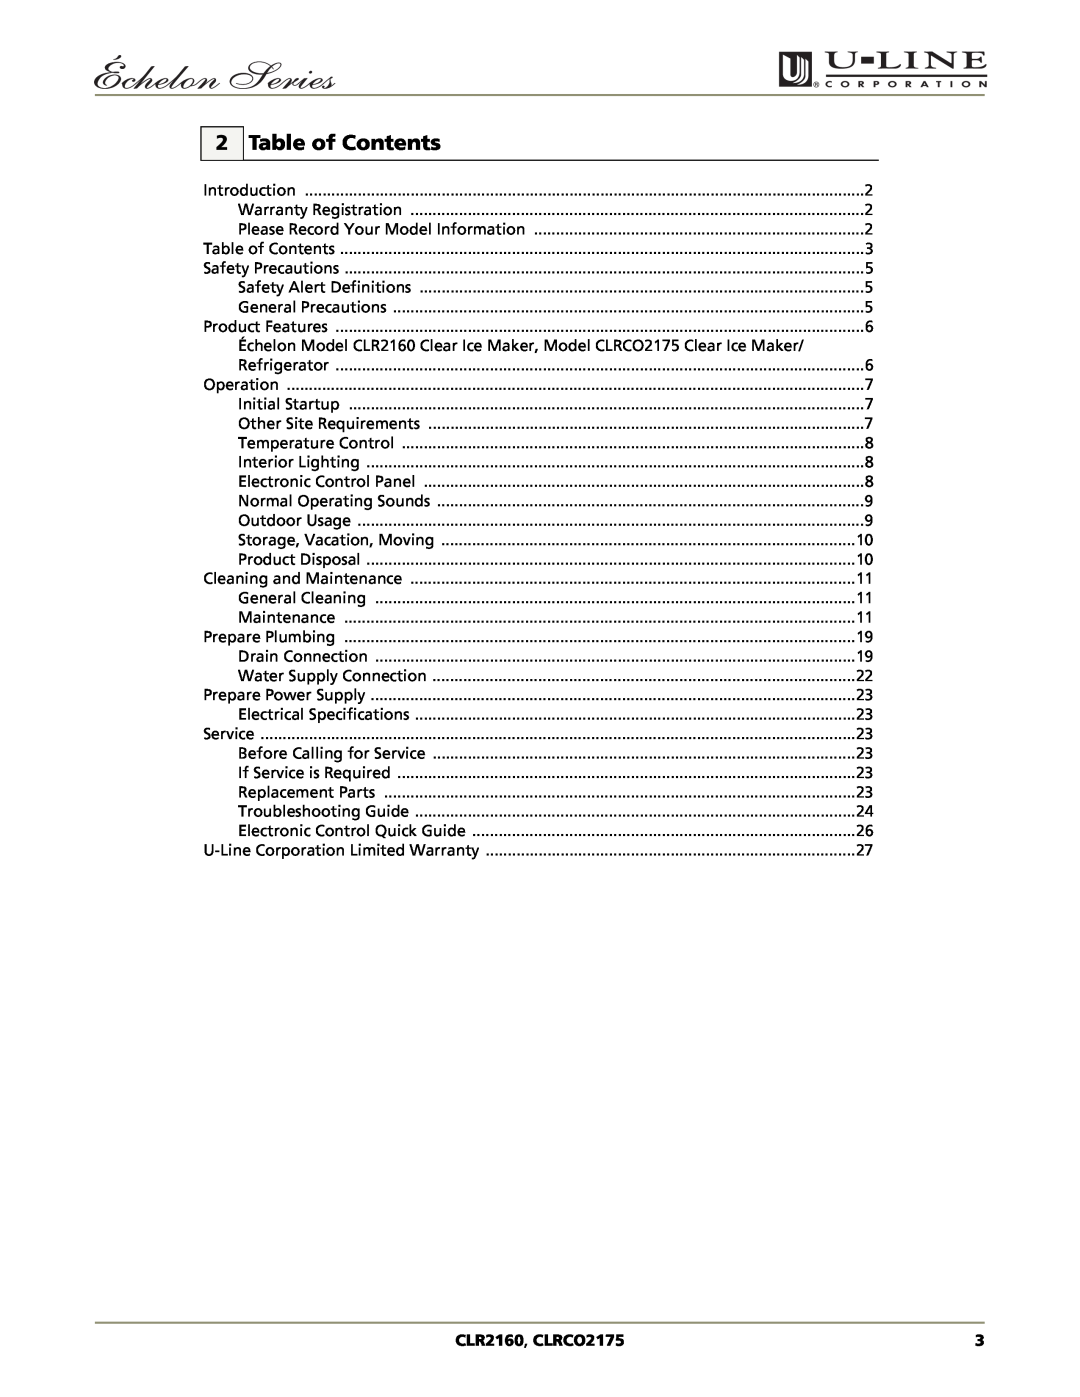 U-Line CLR2160, CLRCO2175 manual Table of Contents 